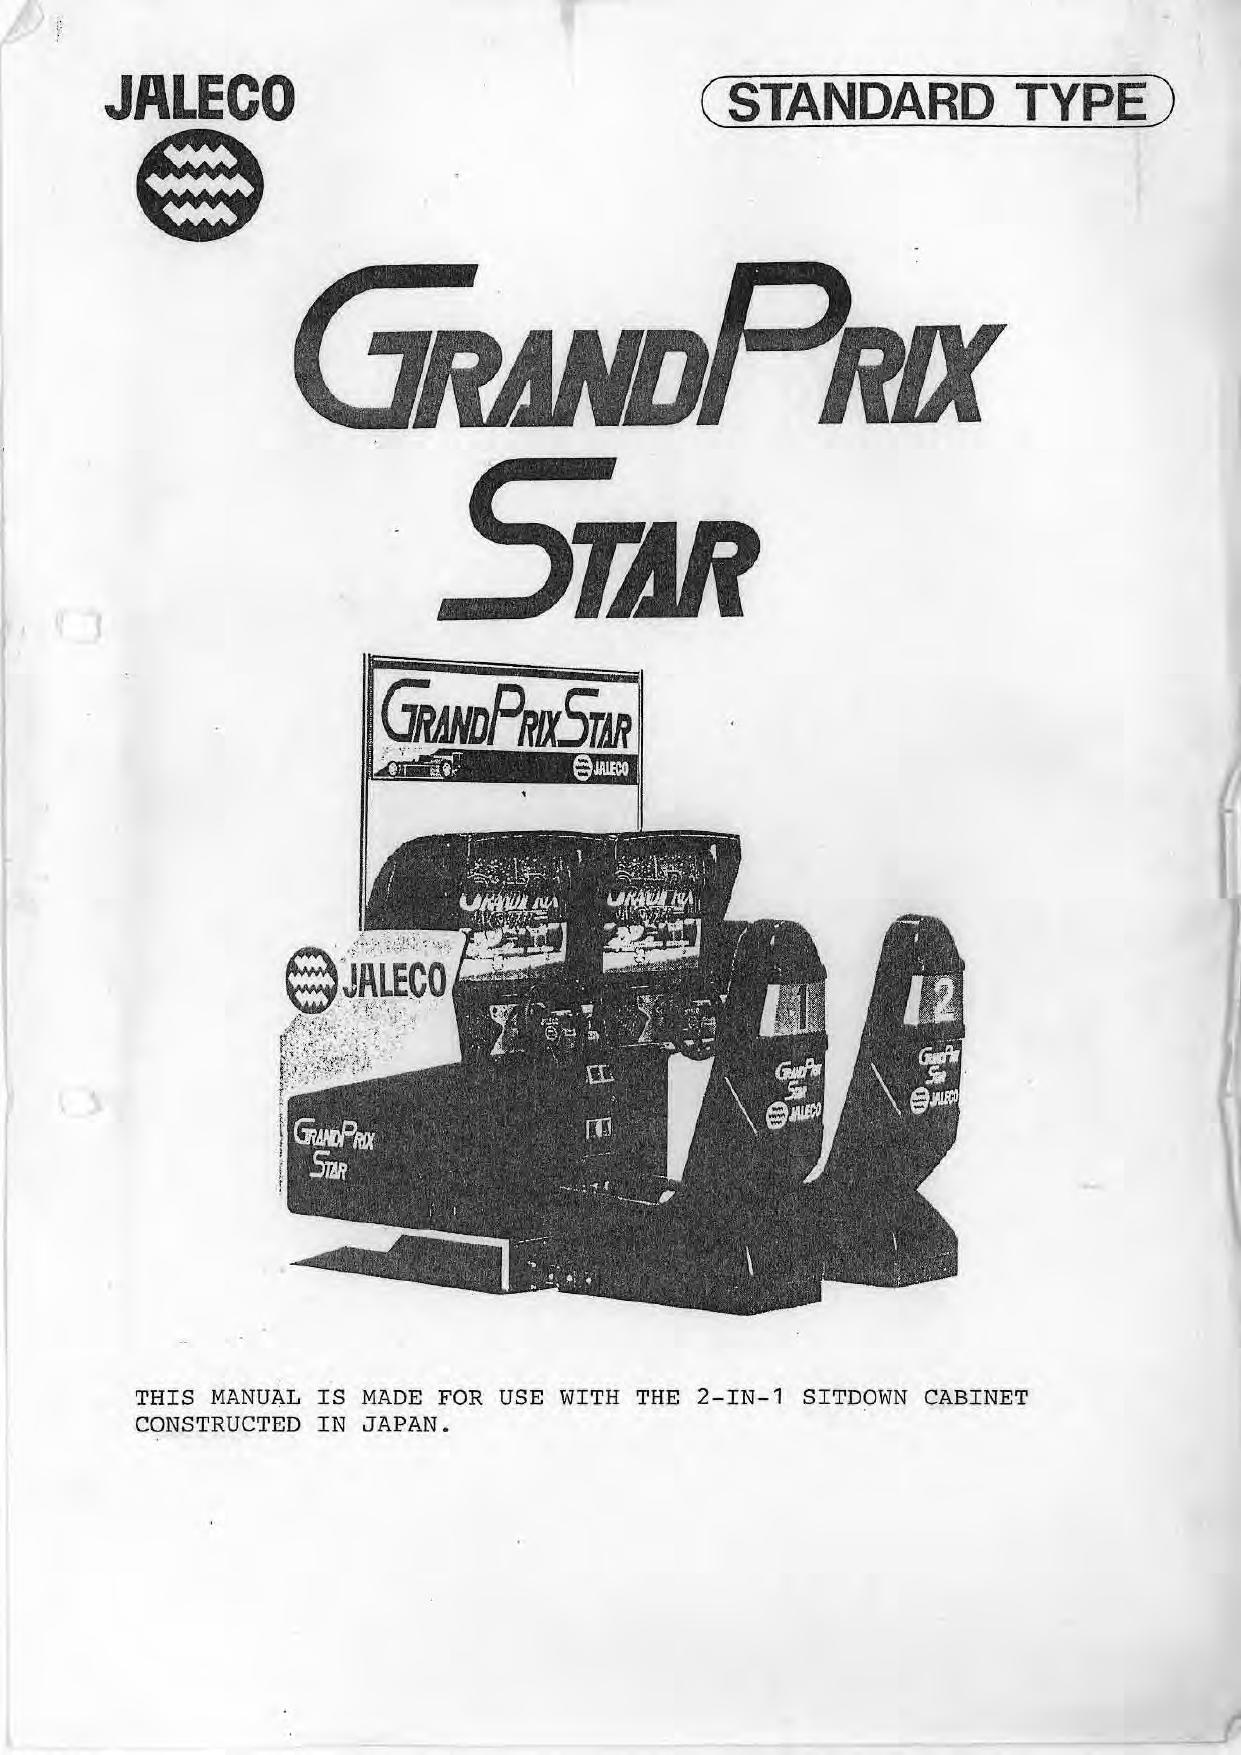 GRAND PRIX STAR STANDARD TYPE